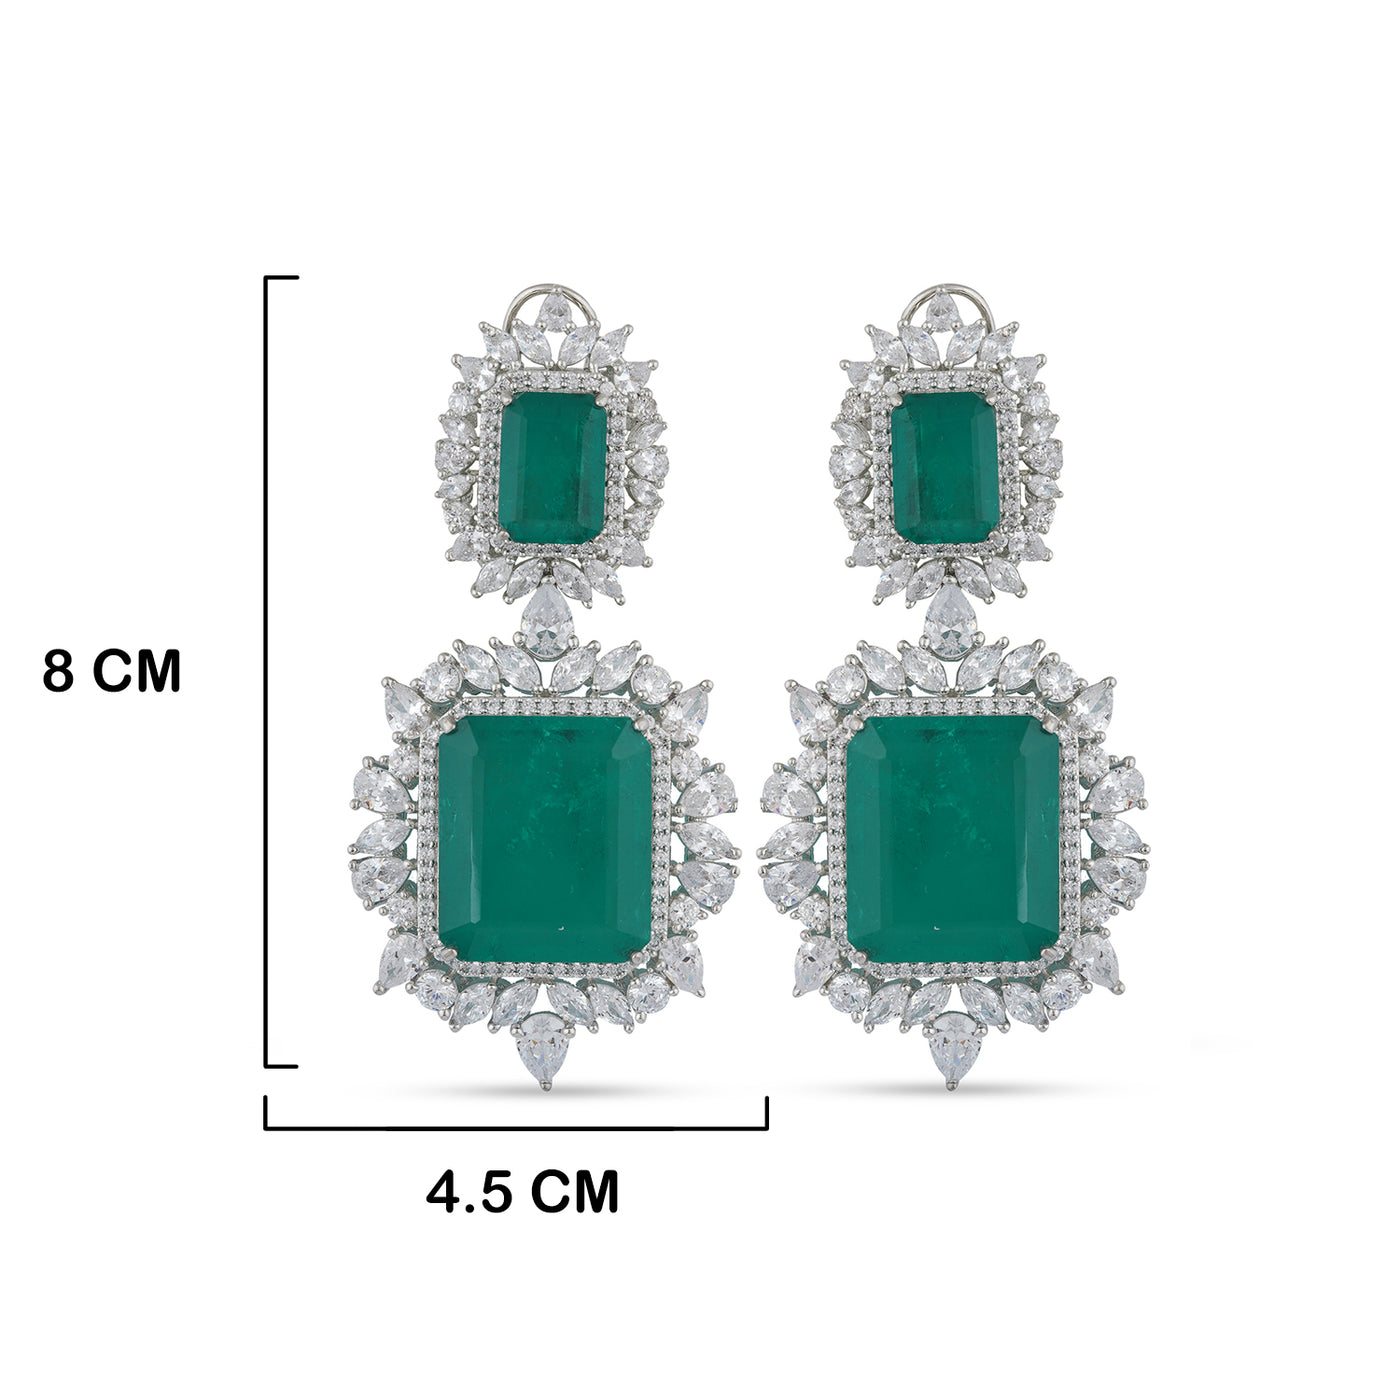 Green Gemstone CZ Earrings with measurements in cm. 8cm by 4.5cm.